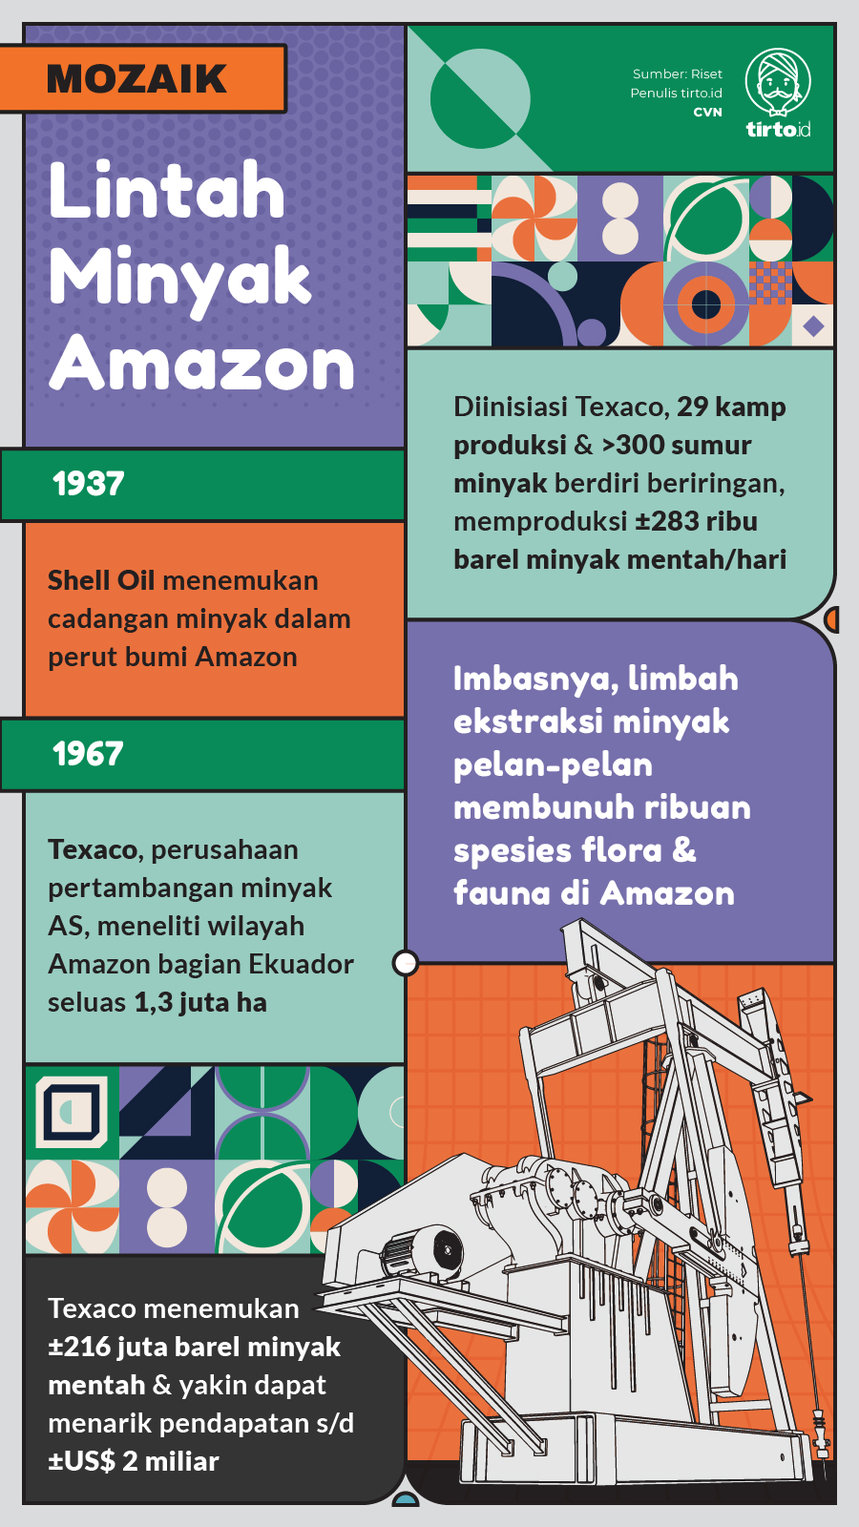 Infografik Mozaik Lintah Minyak Amazon